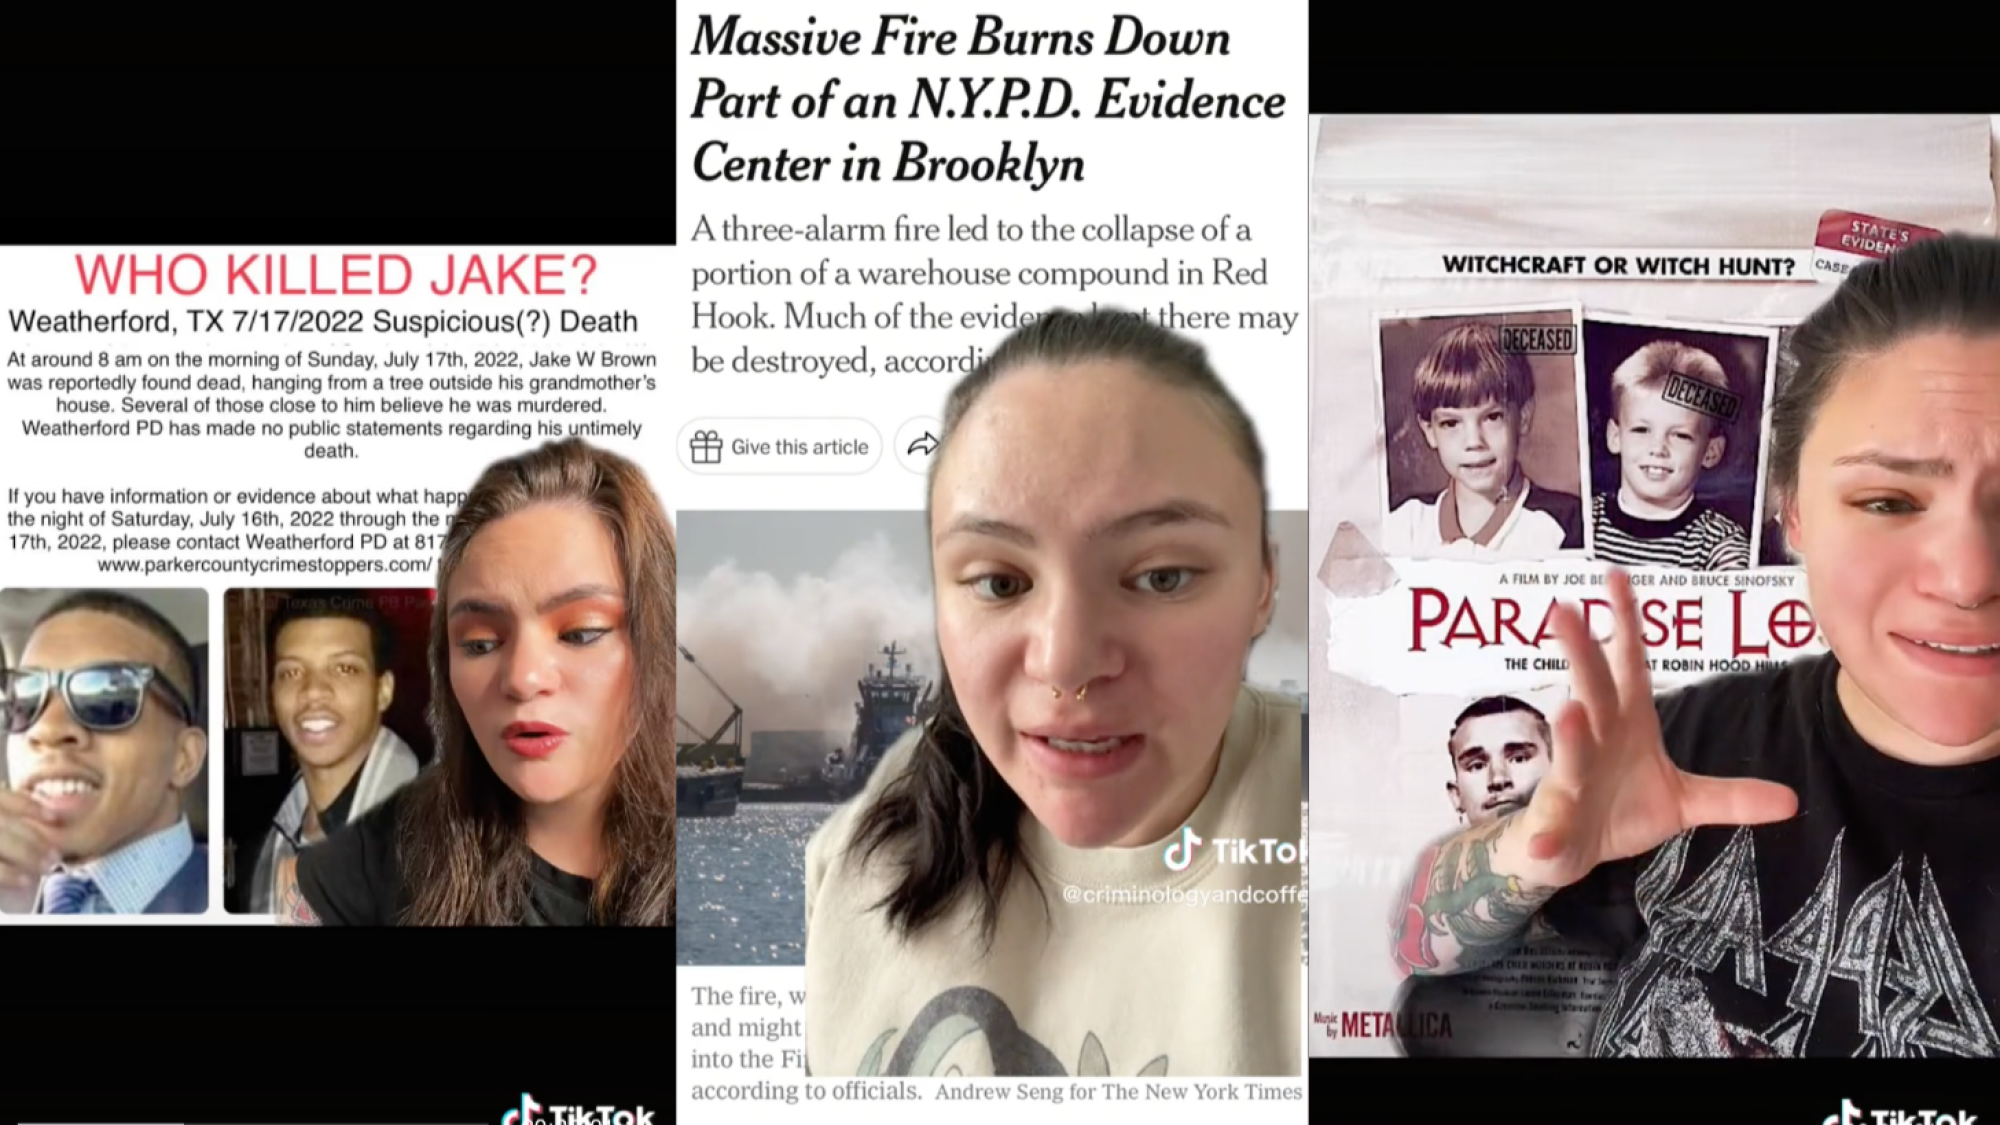 Collage of TikTok screenshots of woman explaining true crime cases.